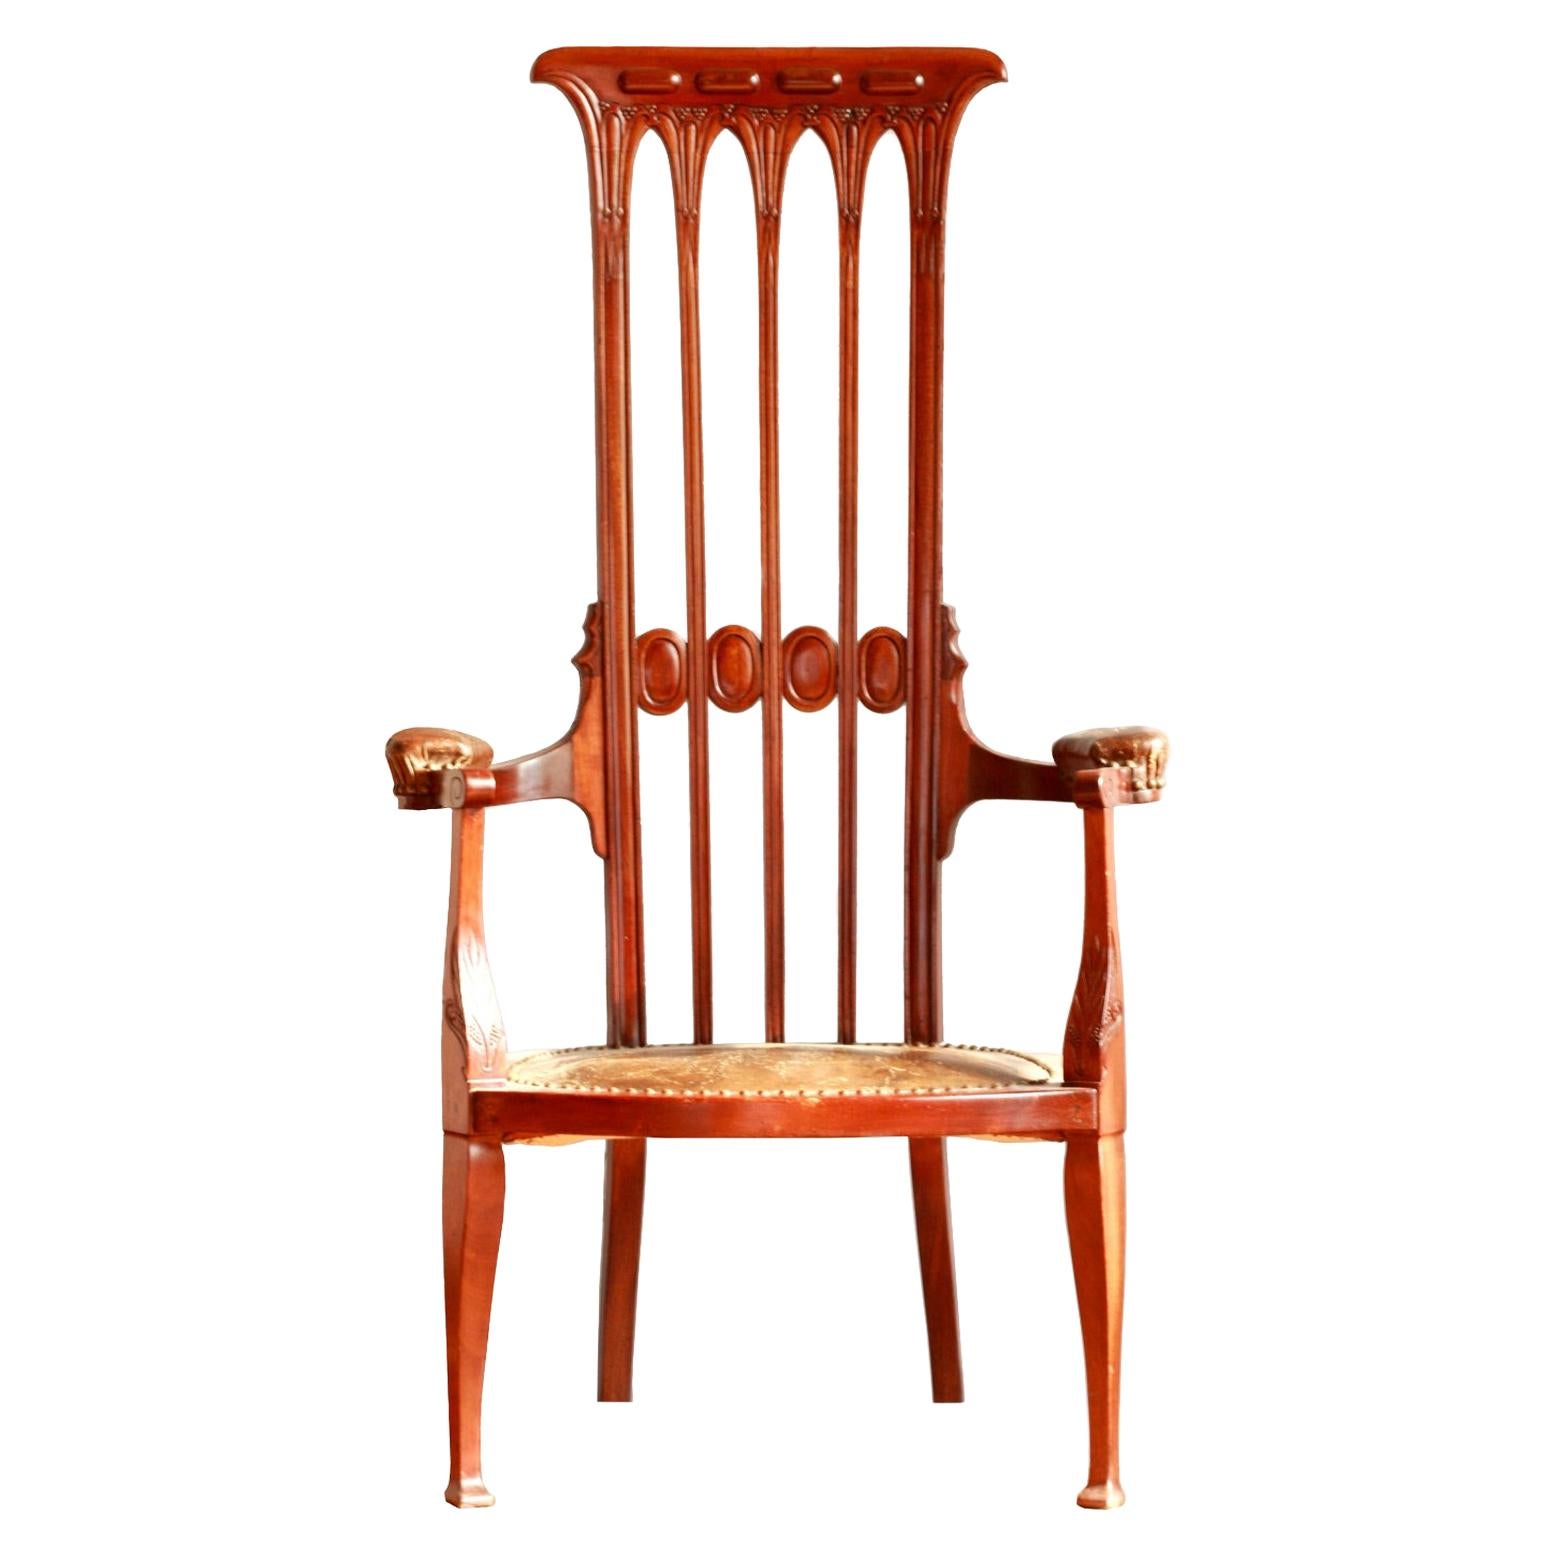 Original I. S. Henry Tall Back Chair London, 1895